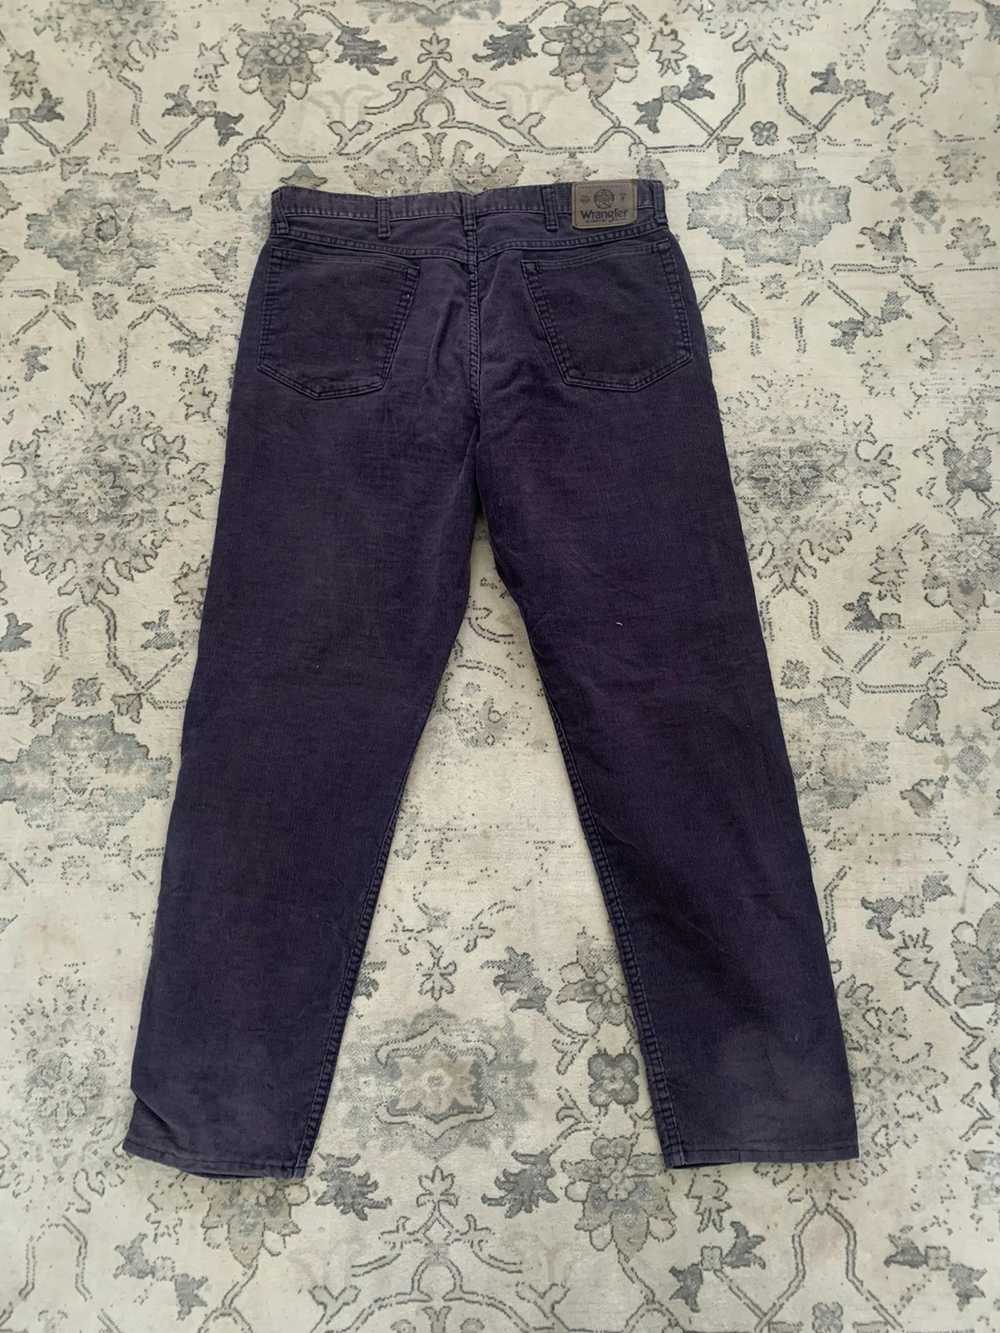 Vintage × Wrangler Vintage Wrangler Corduroy Jeans - image 2